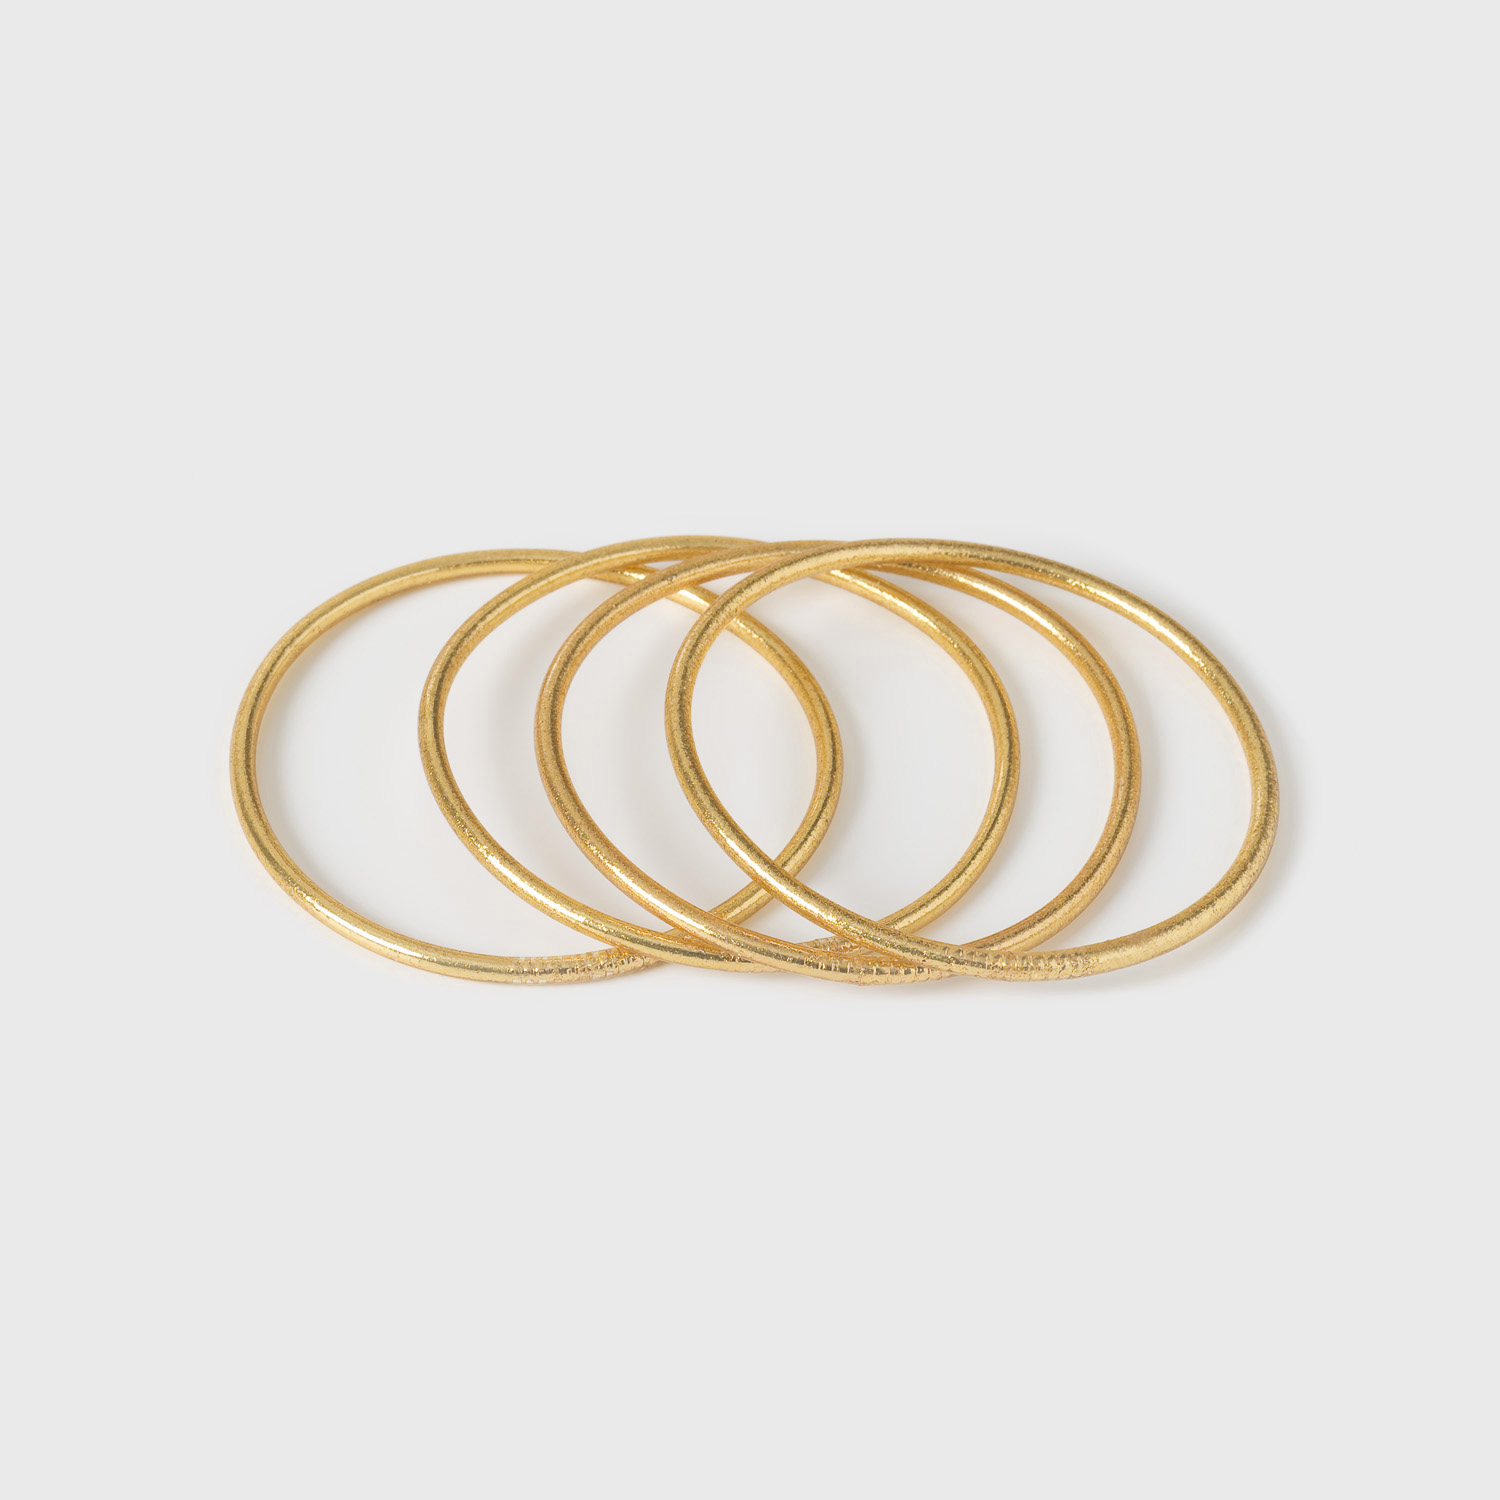 4 Goldleaf mantra bracelets., EXTRA THIN.